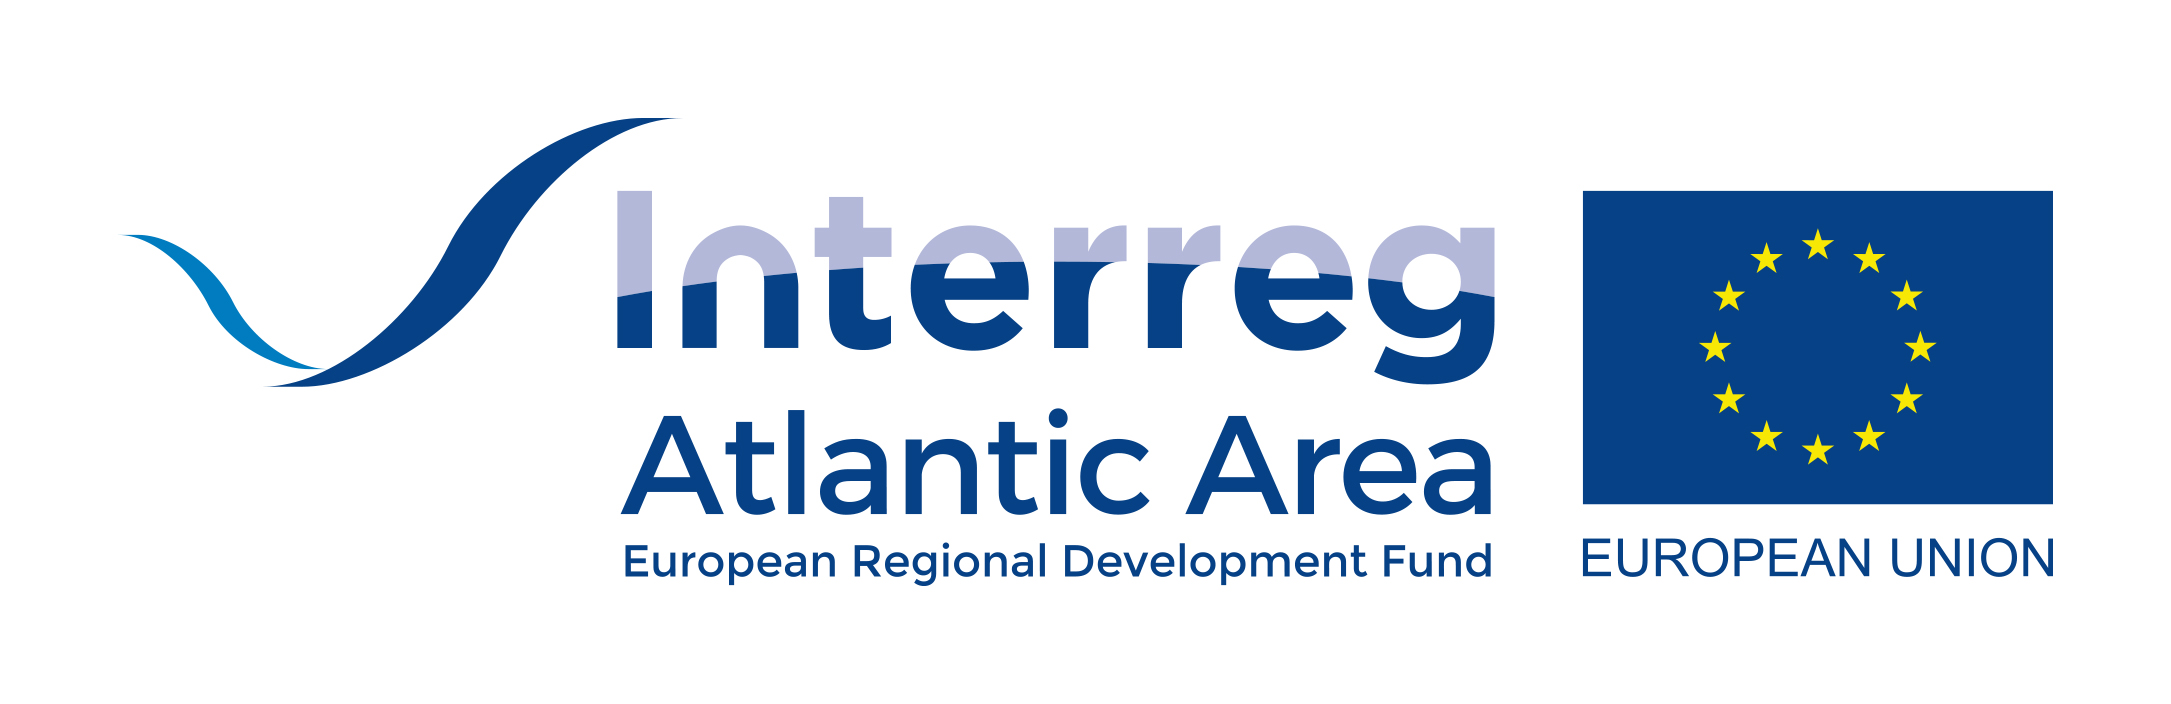 INTERREG Atlantic Area Logo